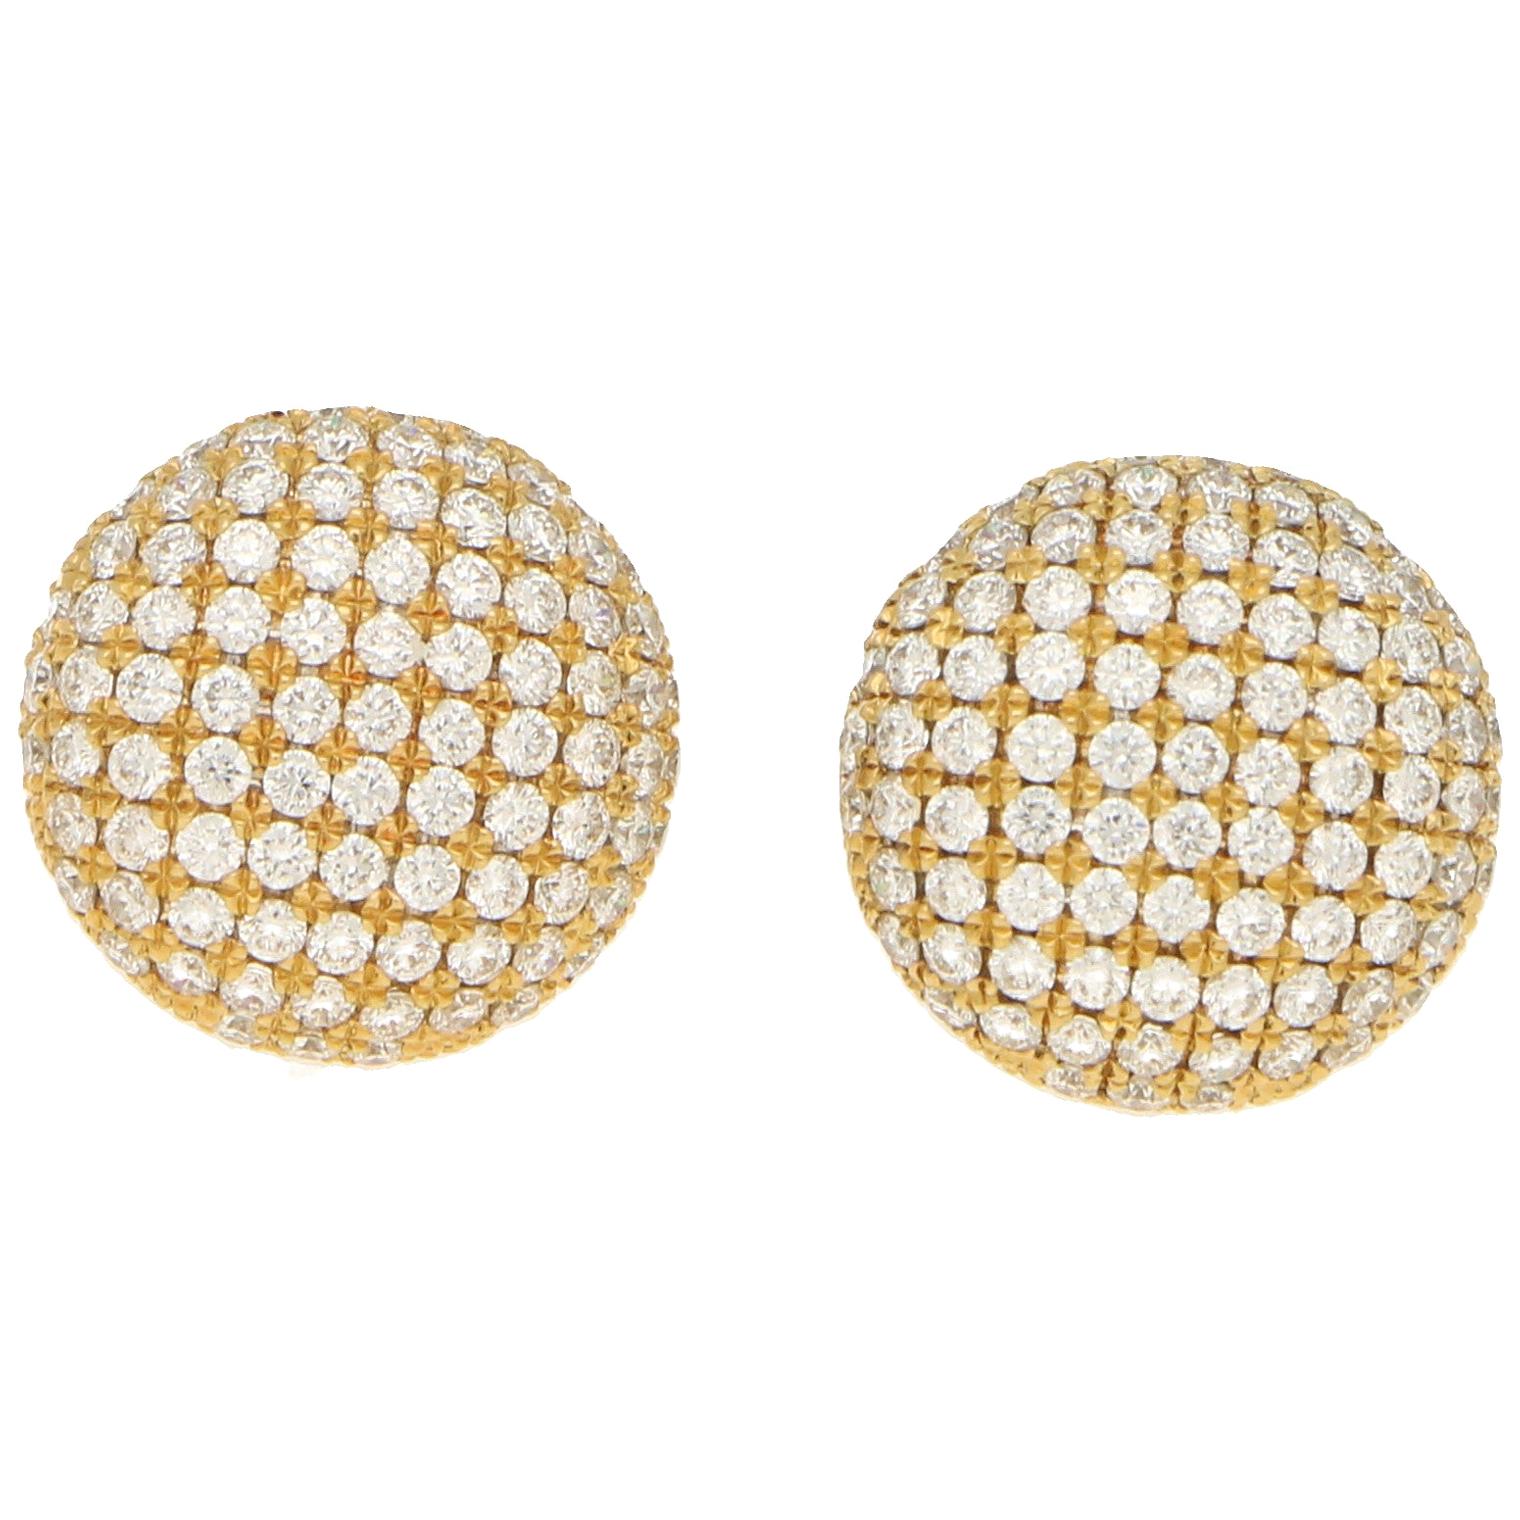 Diamond Domed Button Earrings Set in 18k Yellow Gold 